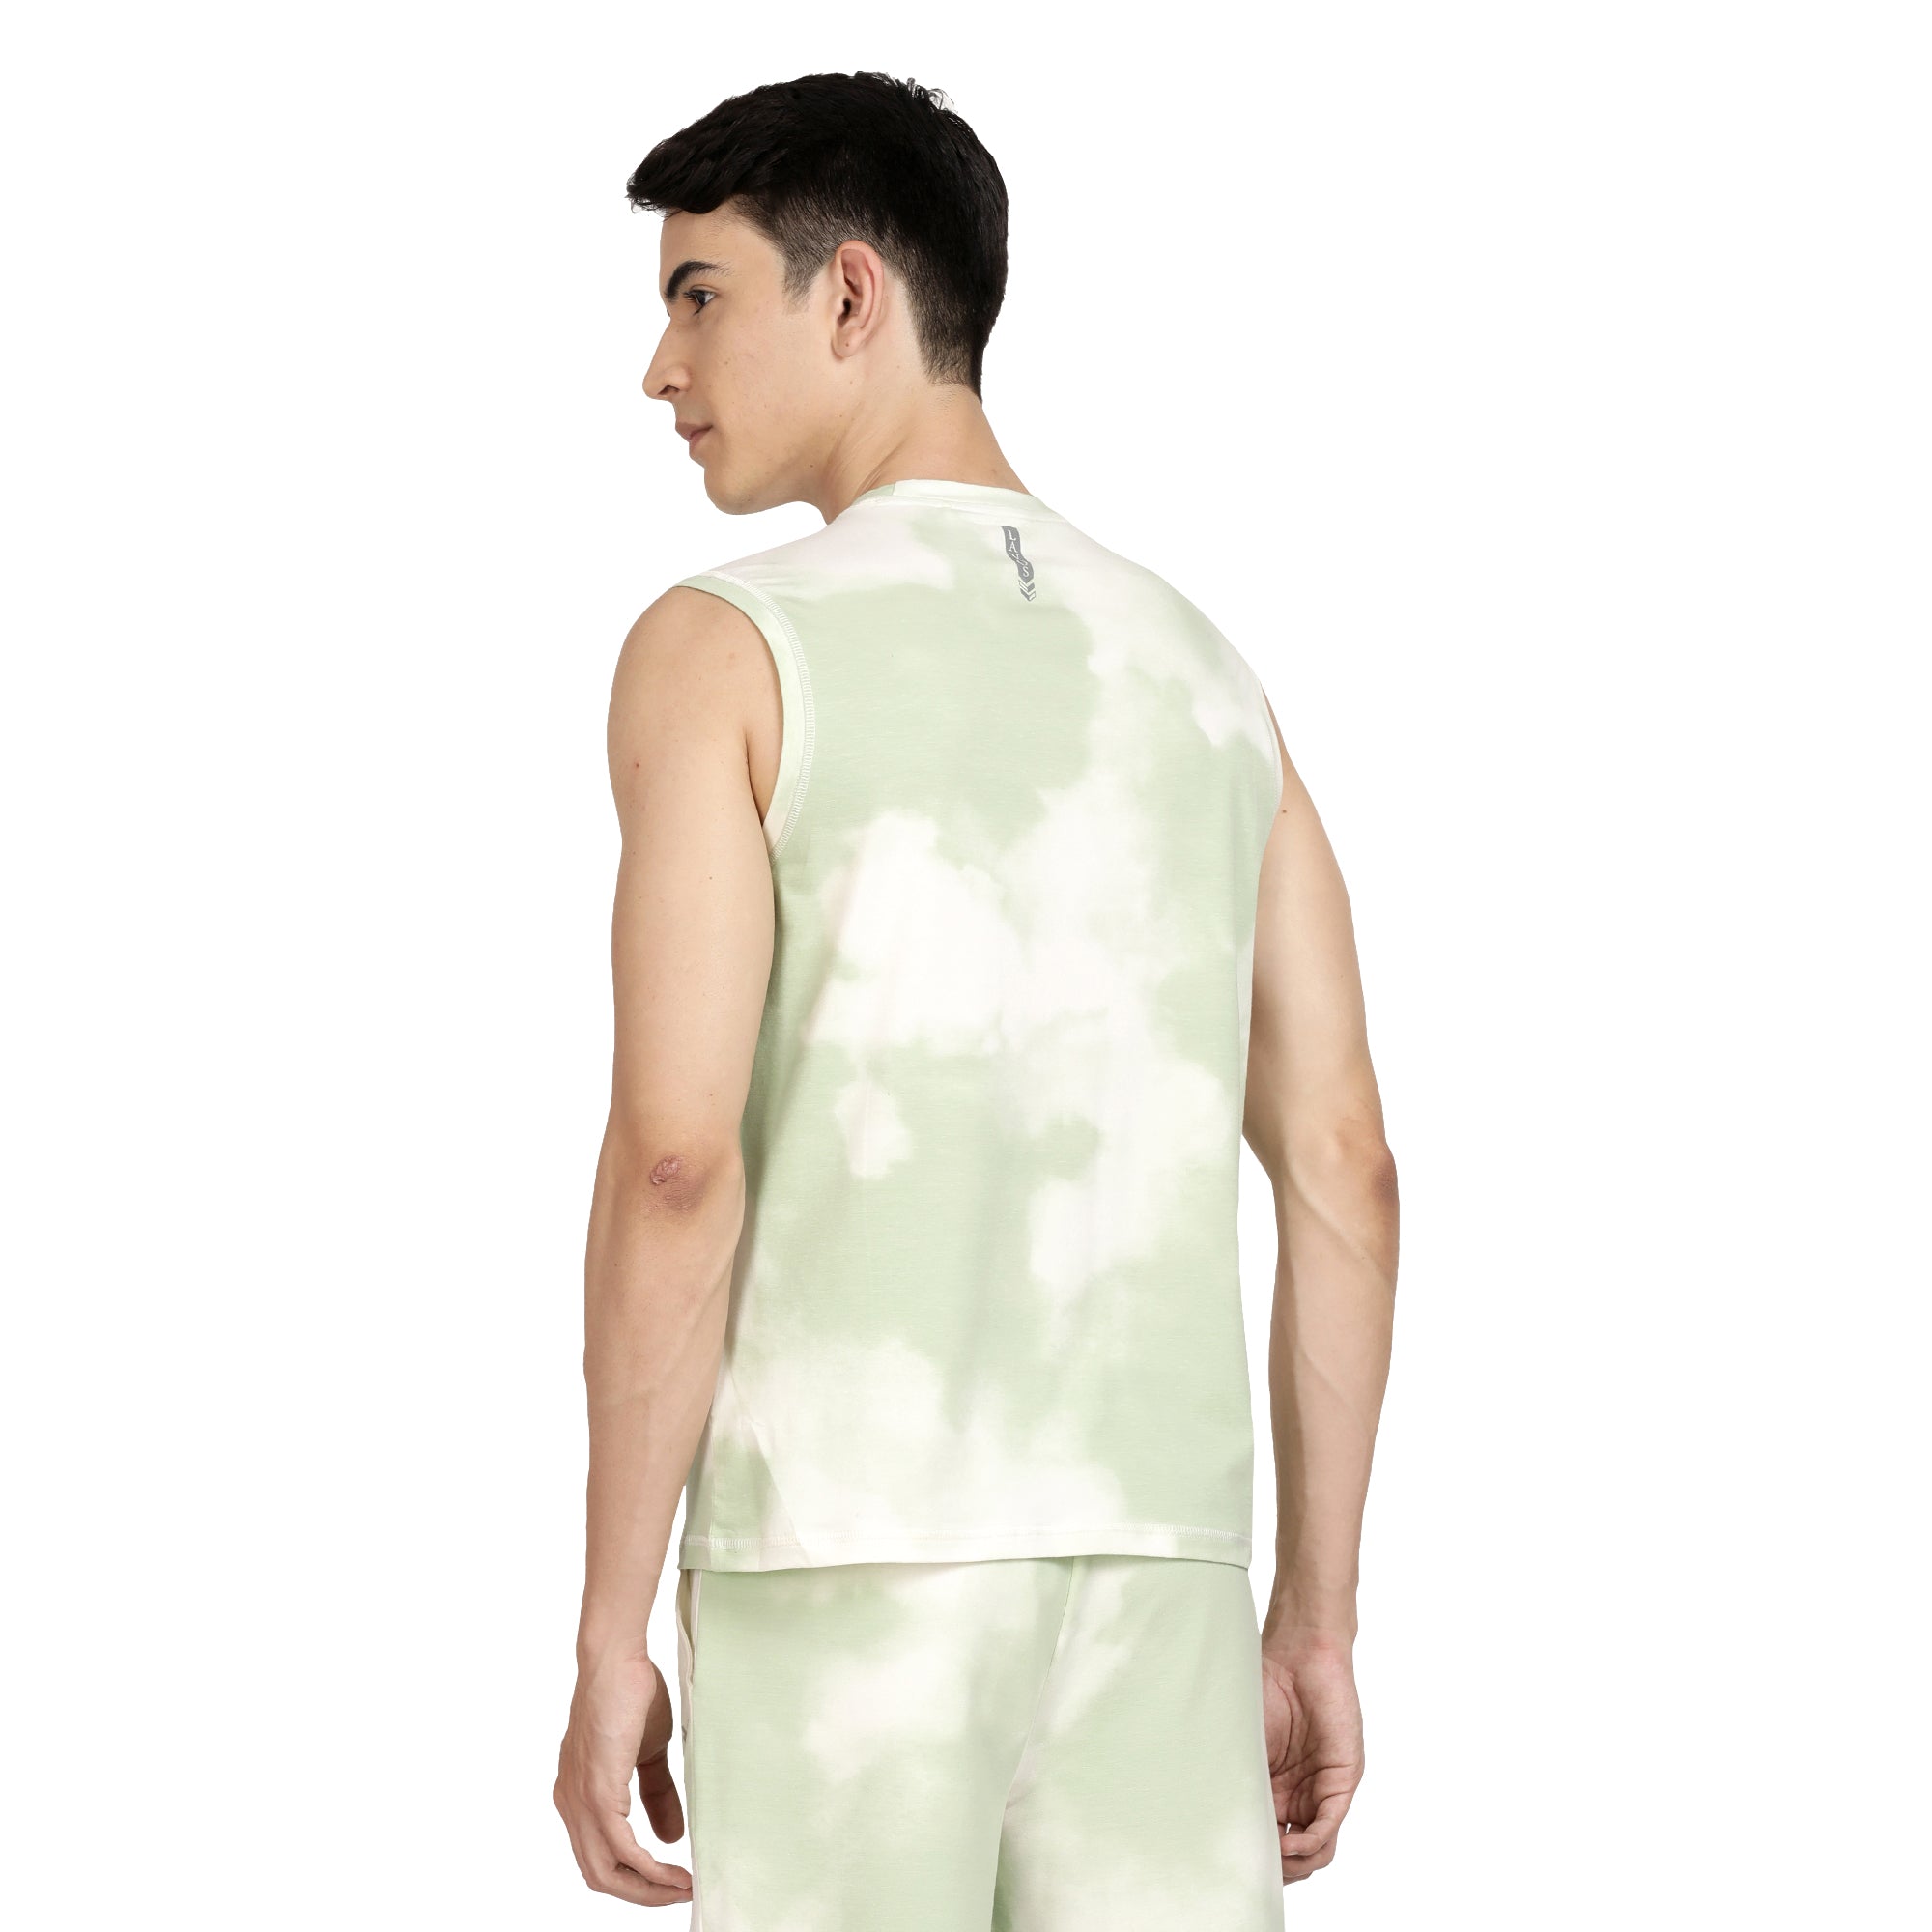 Buy Alba Gym Vest - Multicolor 100% Cotton Sleeveless Vests for